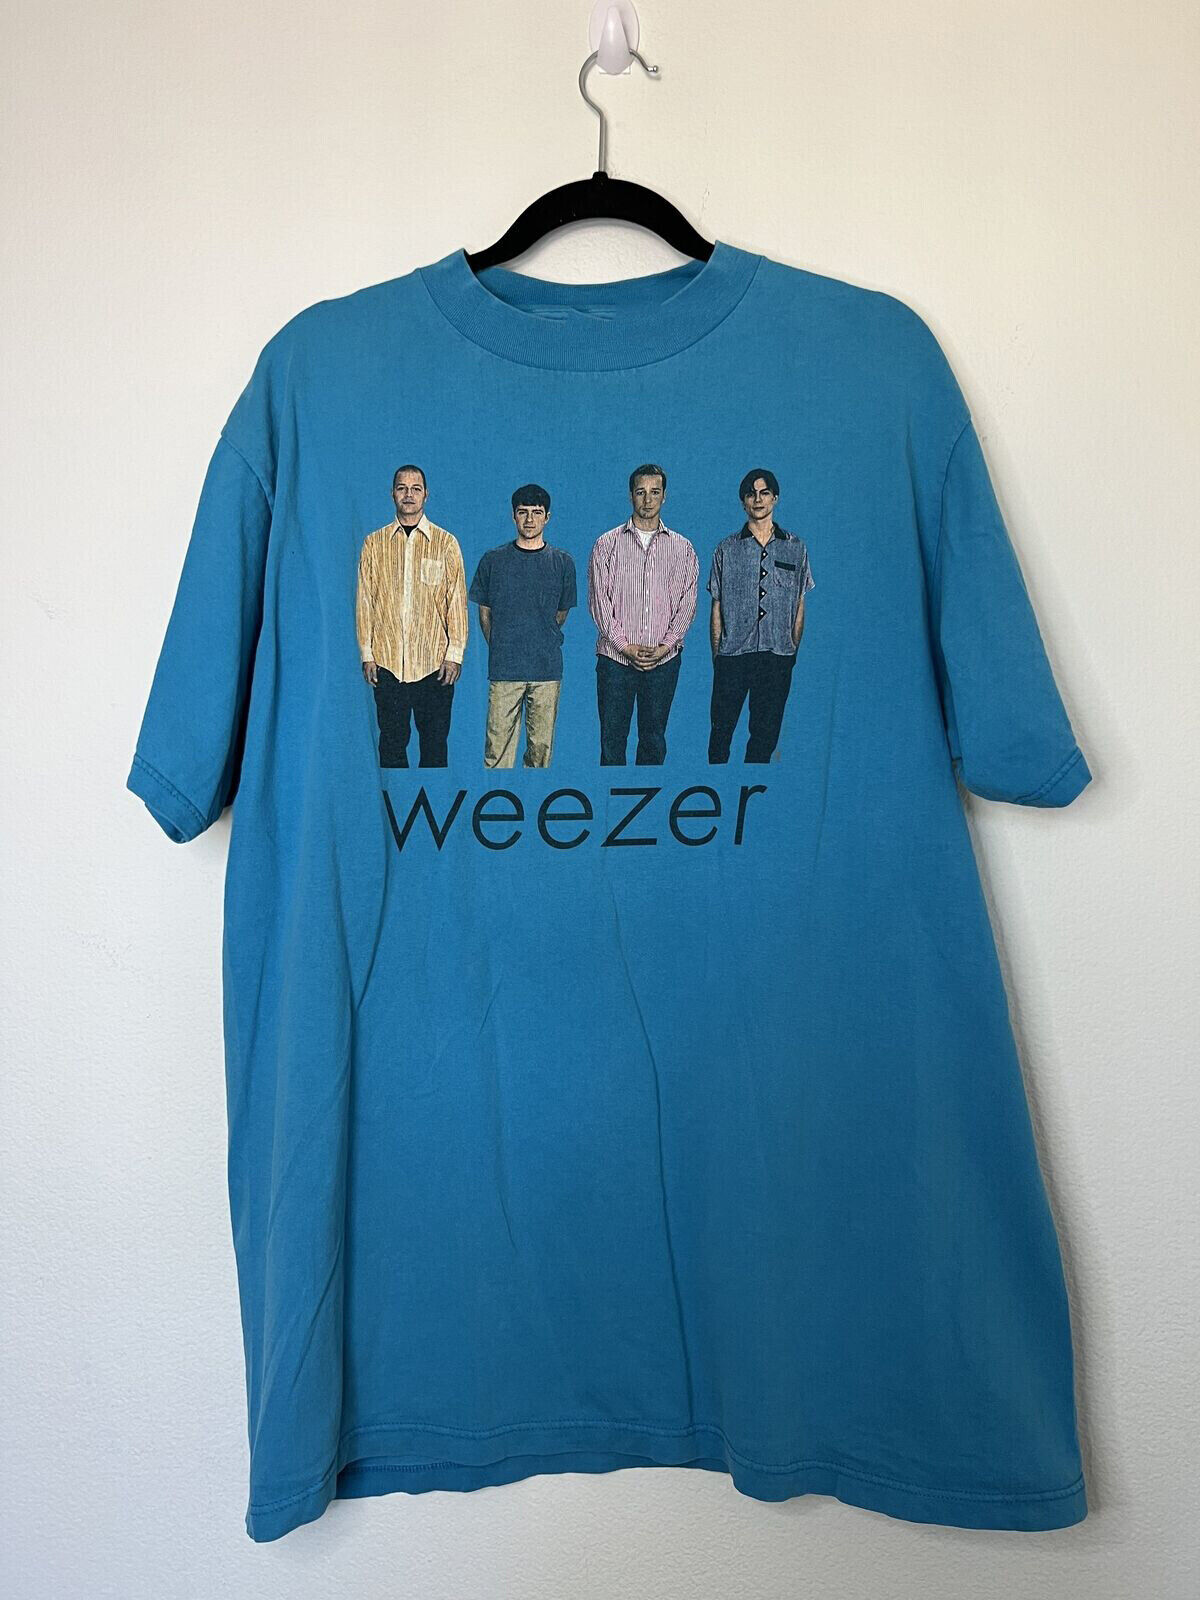 Vtg 1994 Weezer Rock Band Cotton Blue All Size Unisex Shirt MM1102